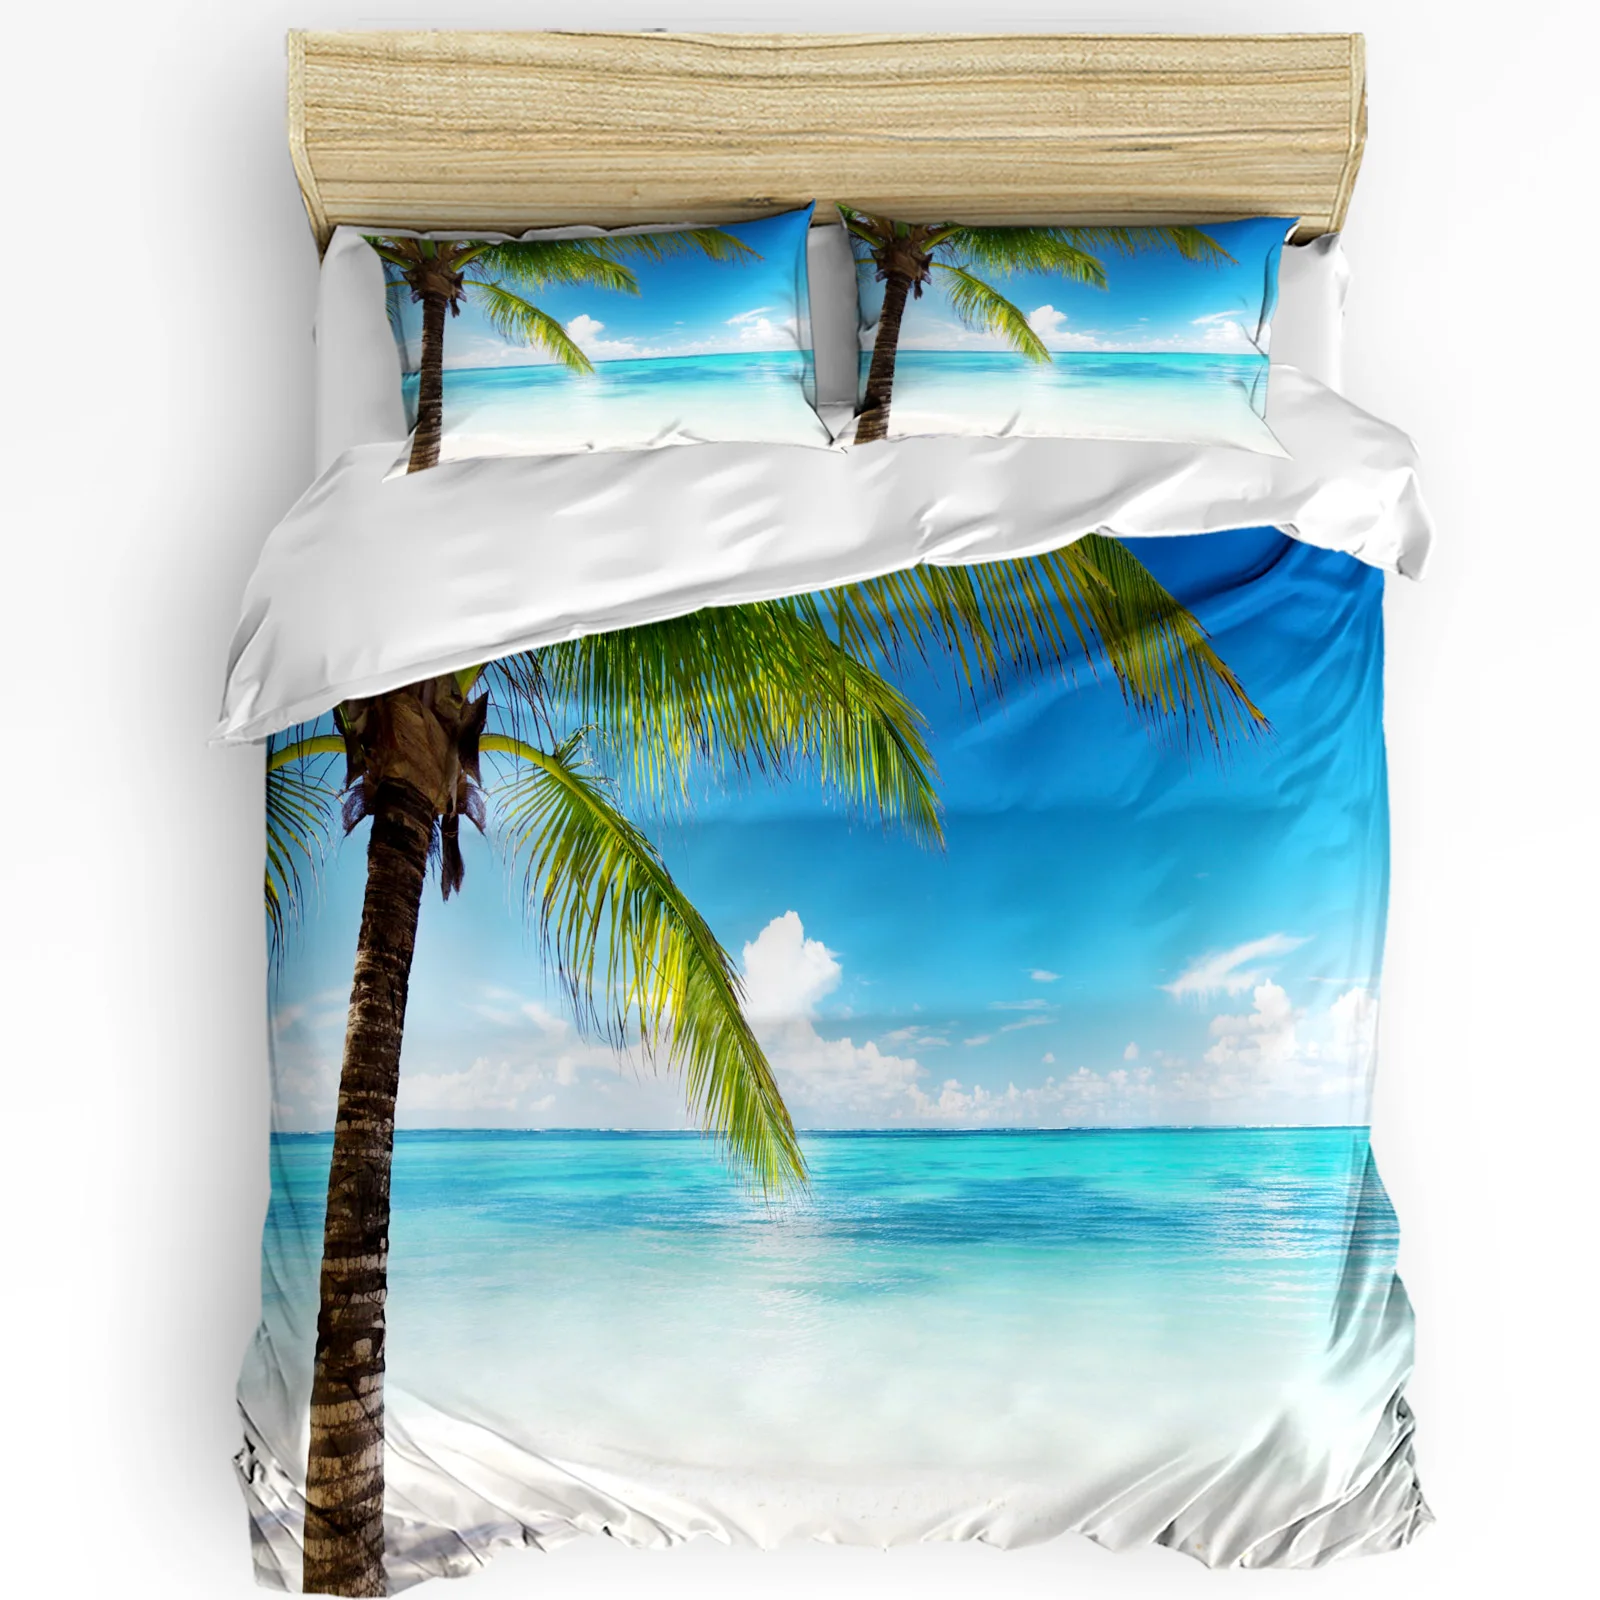 

Beach Coconut Palm Tree Printed Comfort Duvet Cover Pillow Case Home Textile Quilt Cover Boy Kid Teen Girl 3pcs Bedding Set